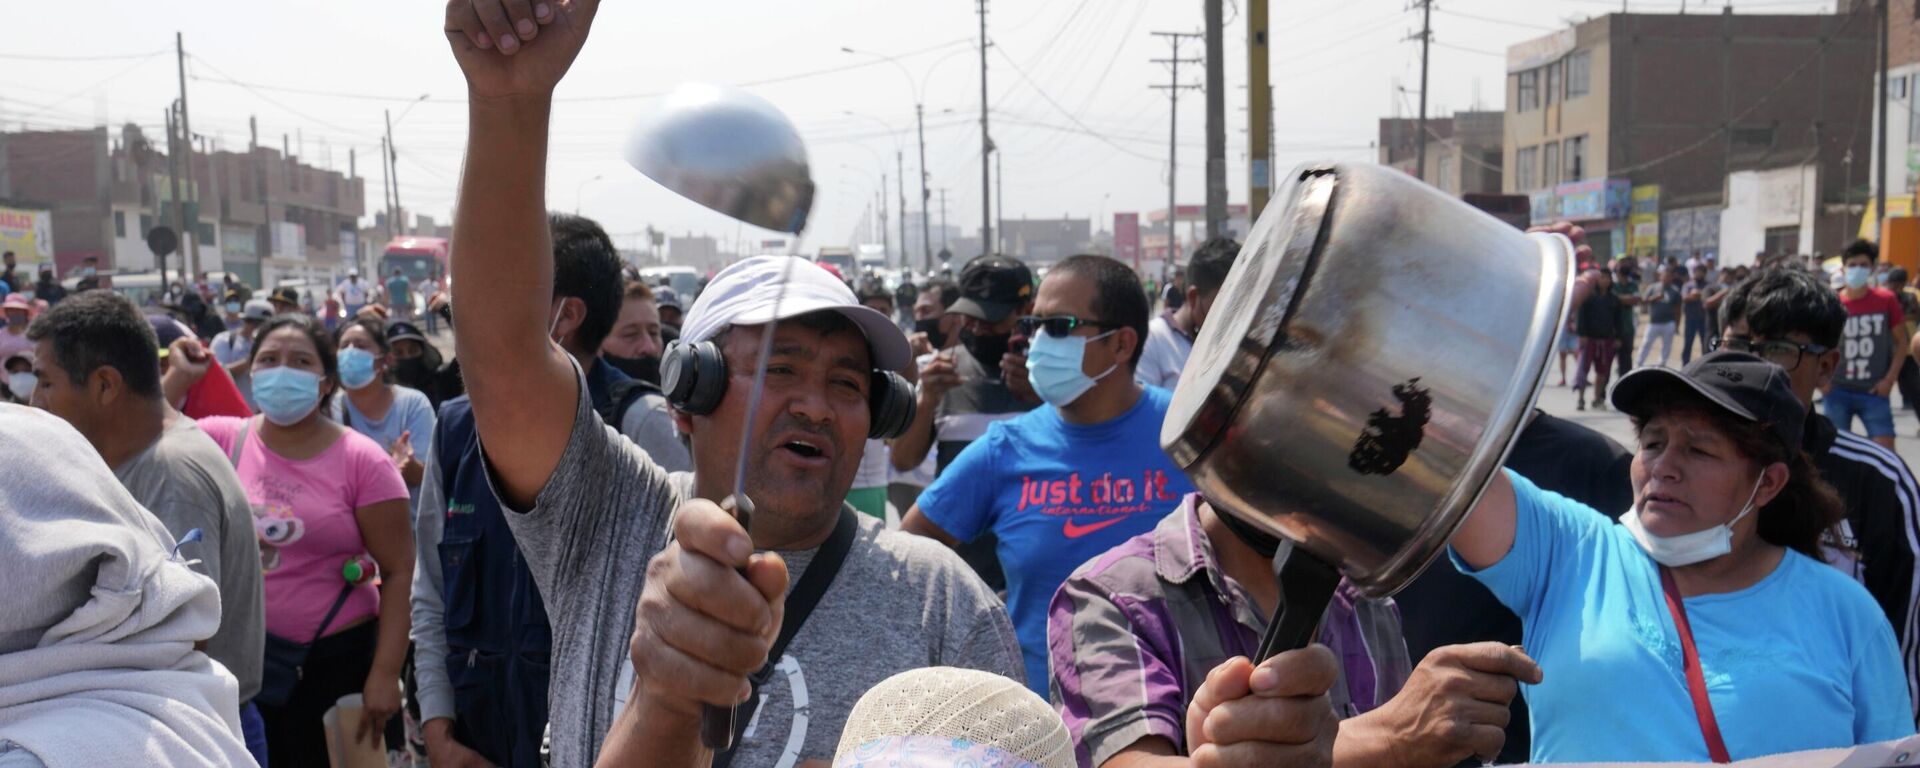 Protestas de transportistas en Perú - Sputnik Mundo, 1920, 04.04.2022